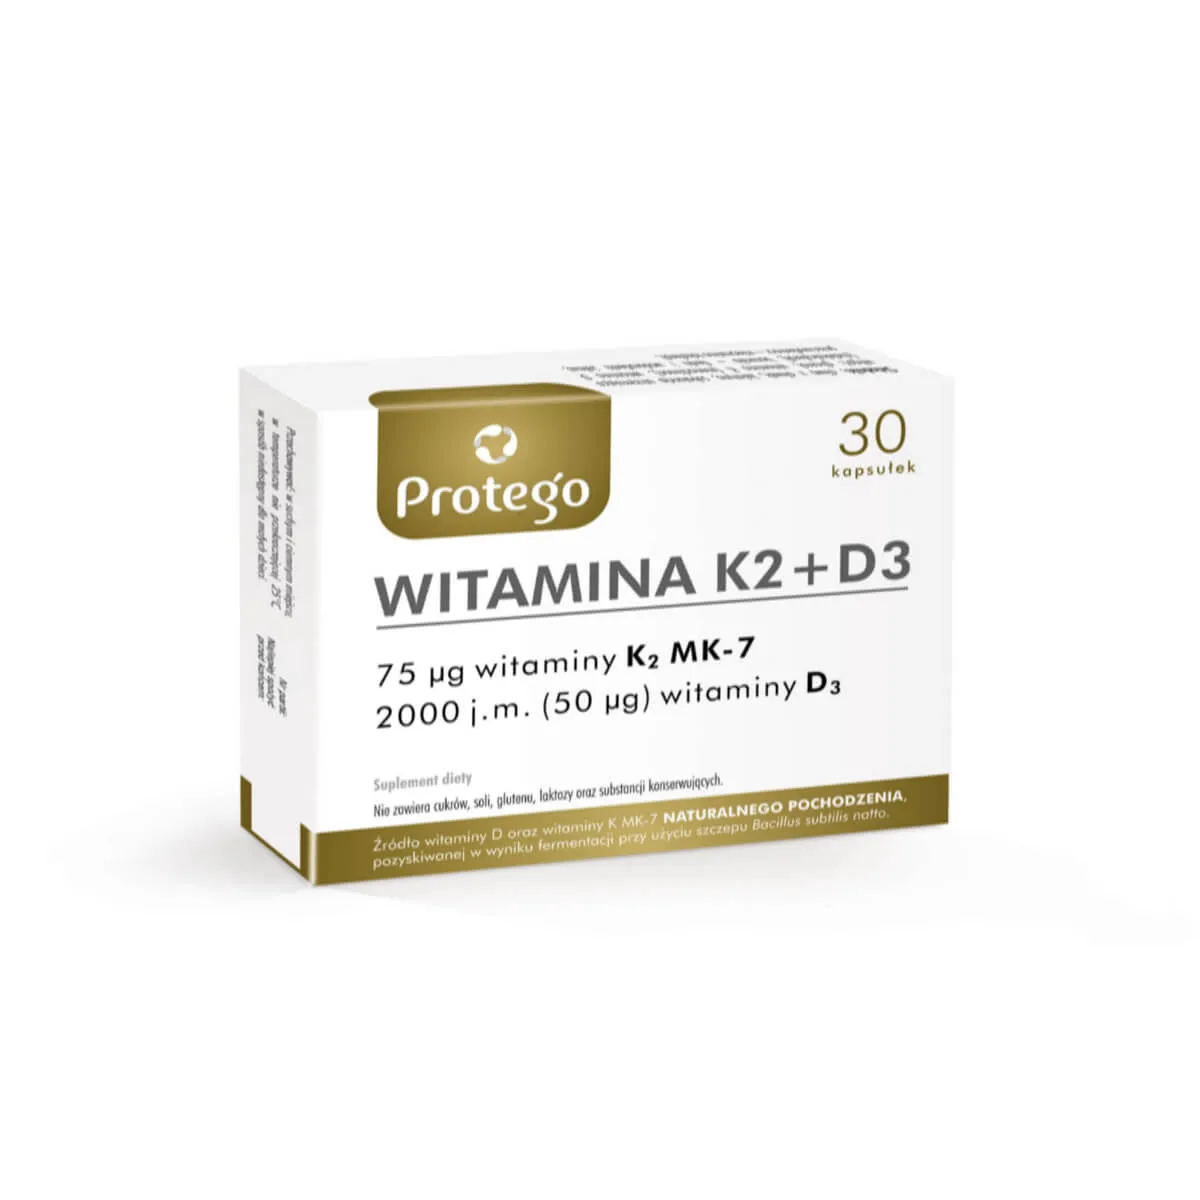 Protego Witamina K2+D3, suplement diety, 30 kapsułek